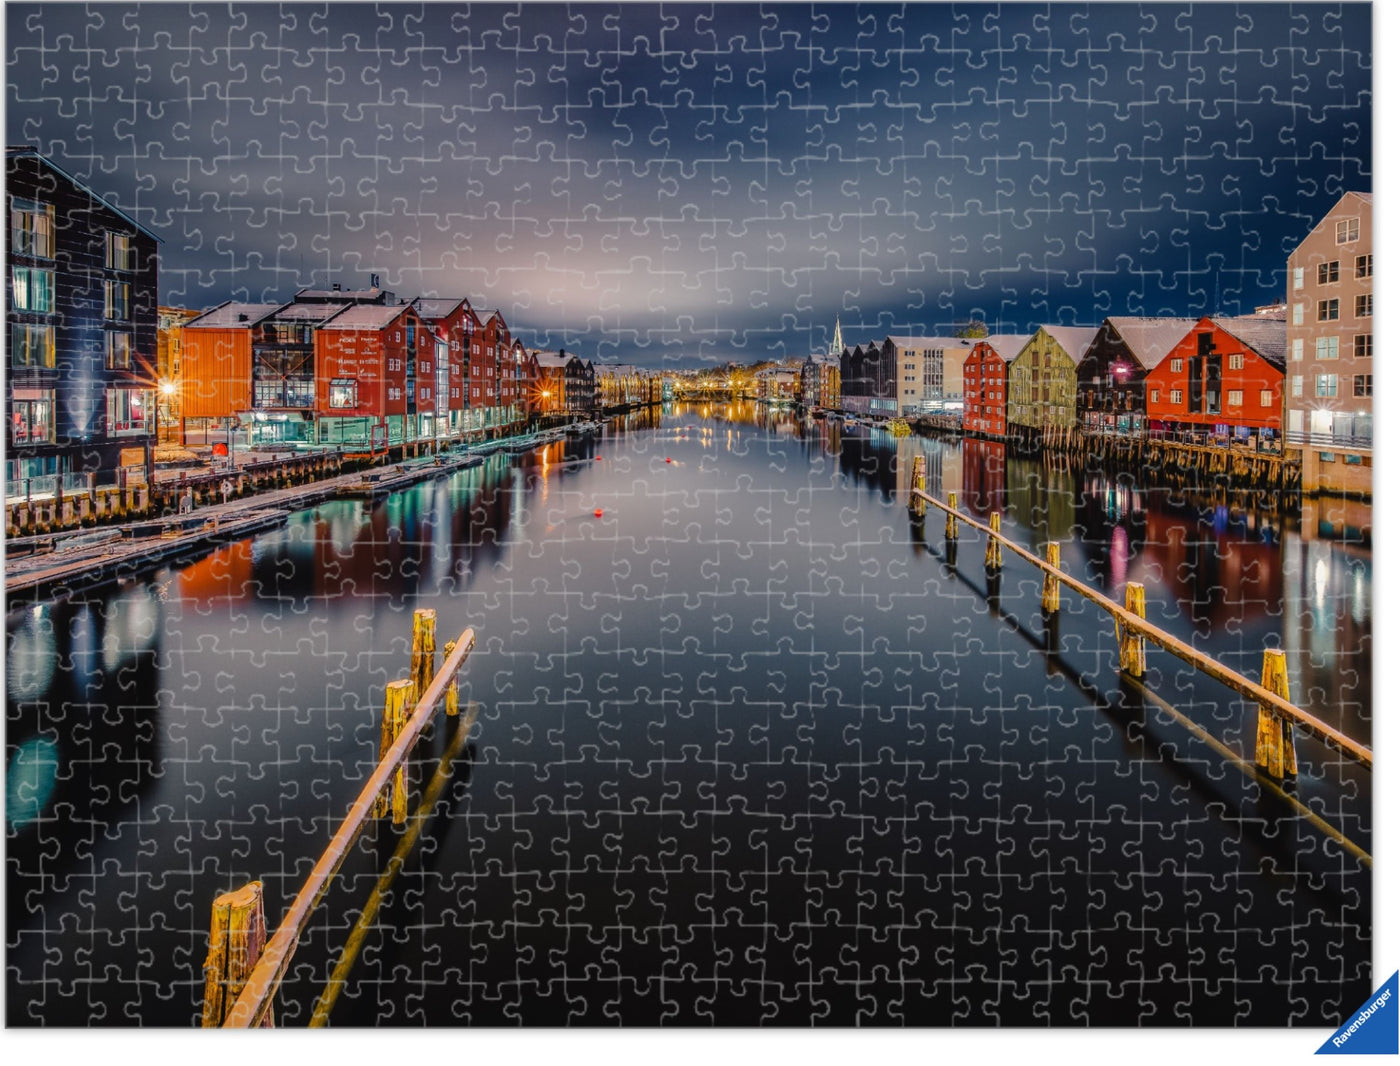 Trondheim Night From Bakke Bru 2 (Photo Puzzle) - AZIZ NASUTI ART GALLERY